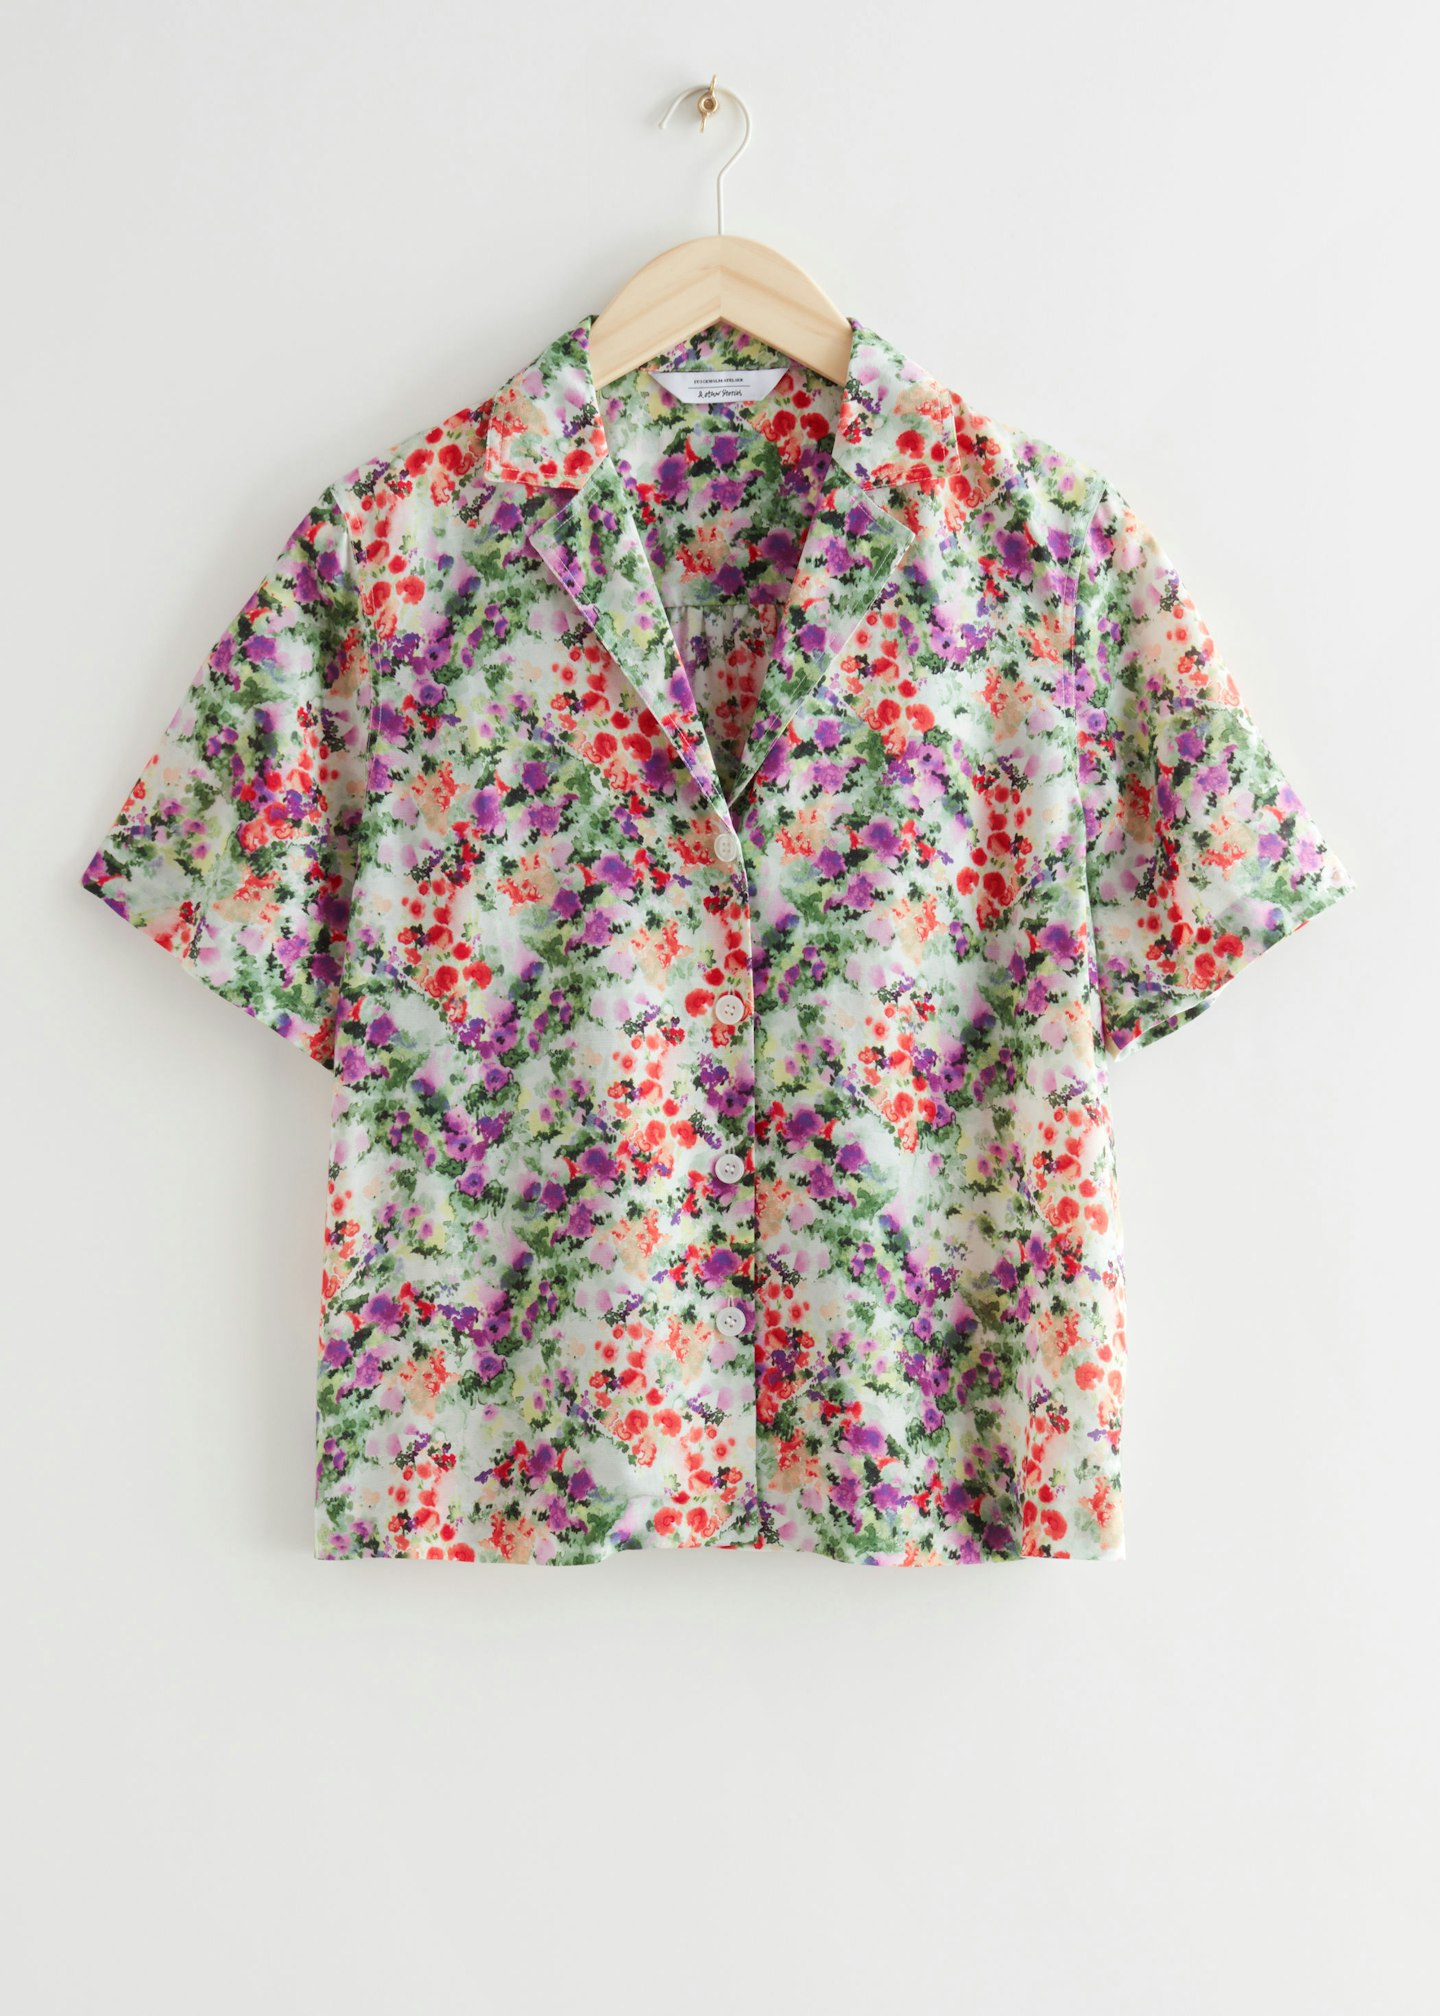 & Other Stories, Short Short Floral-Print Shirt, £65